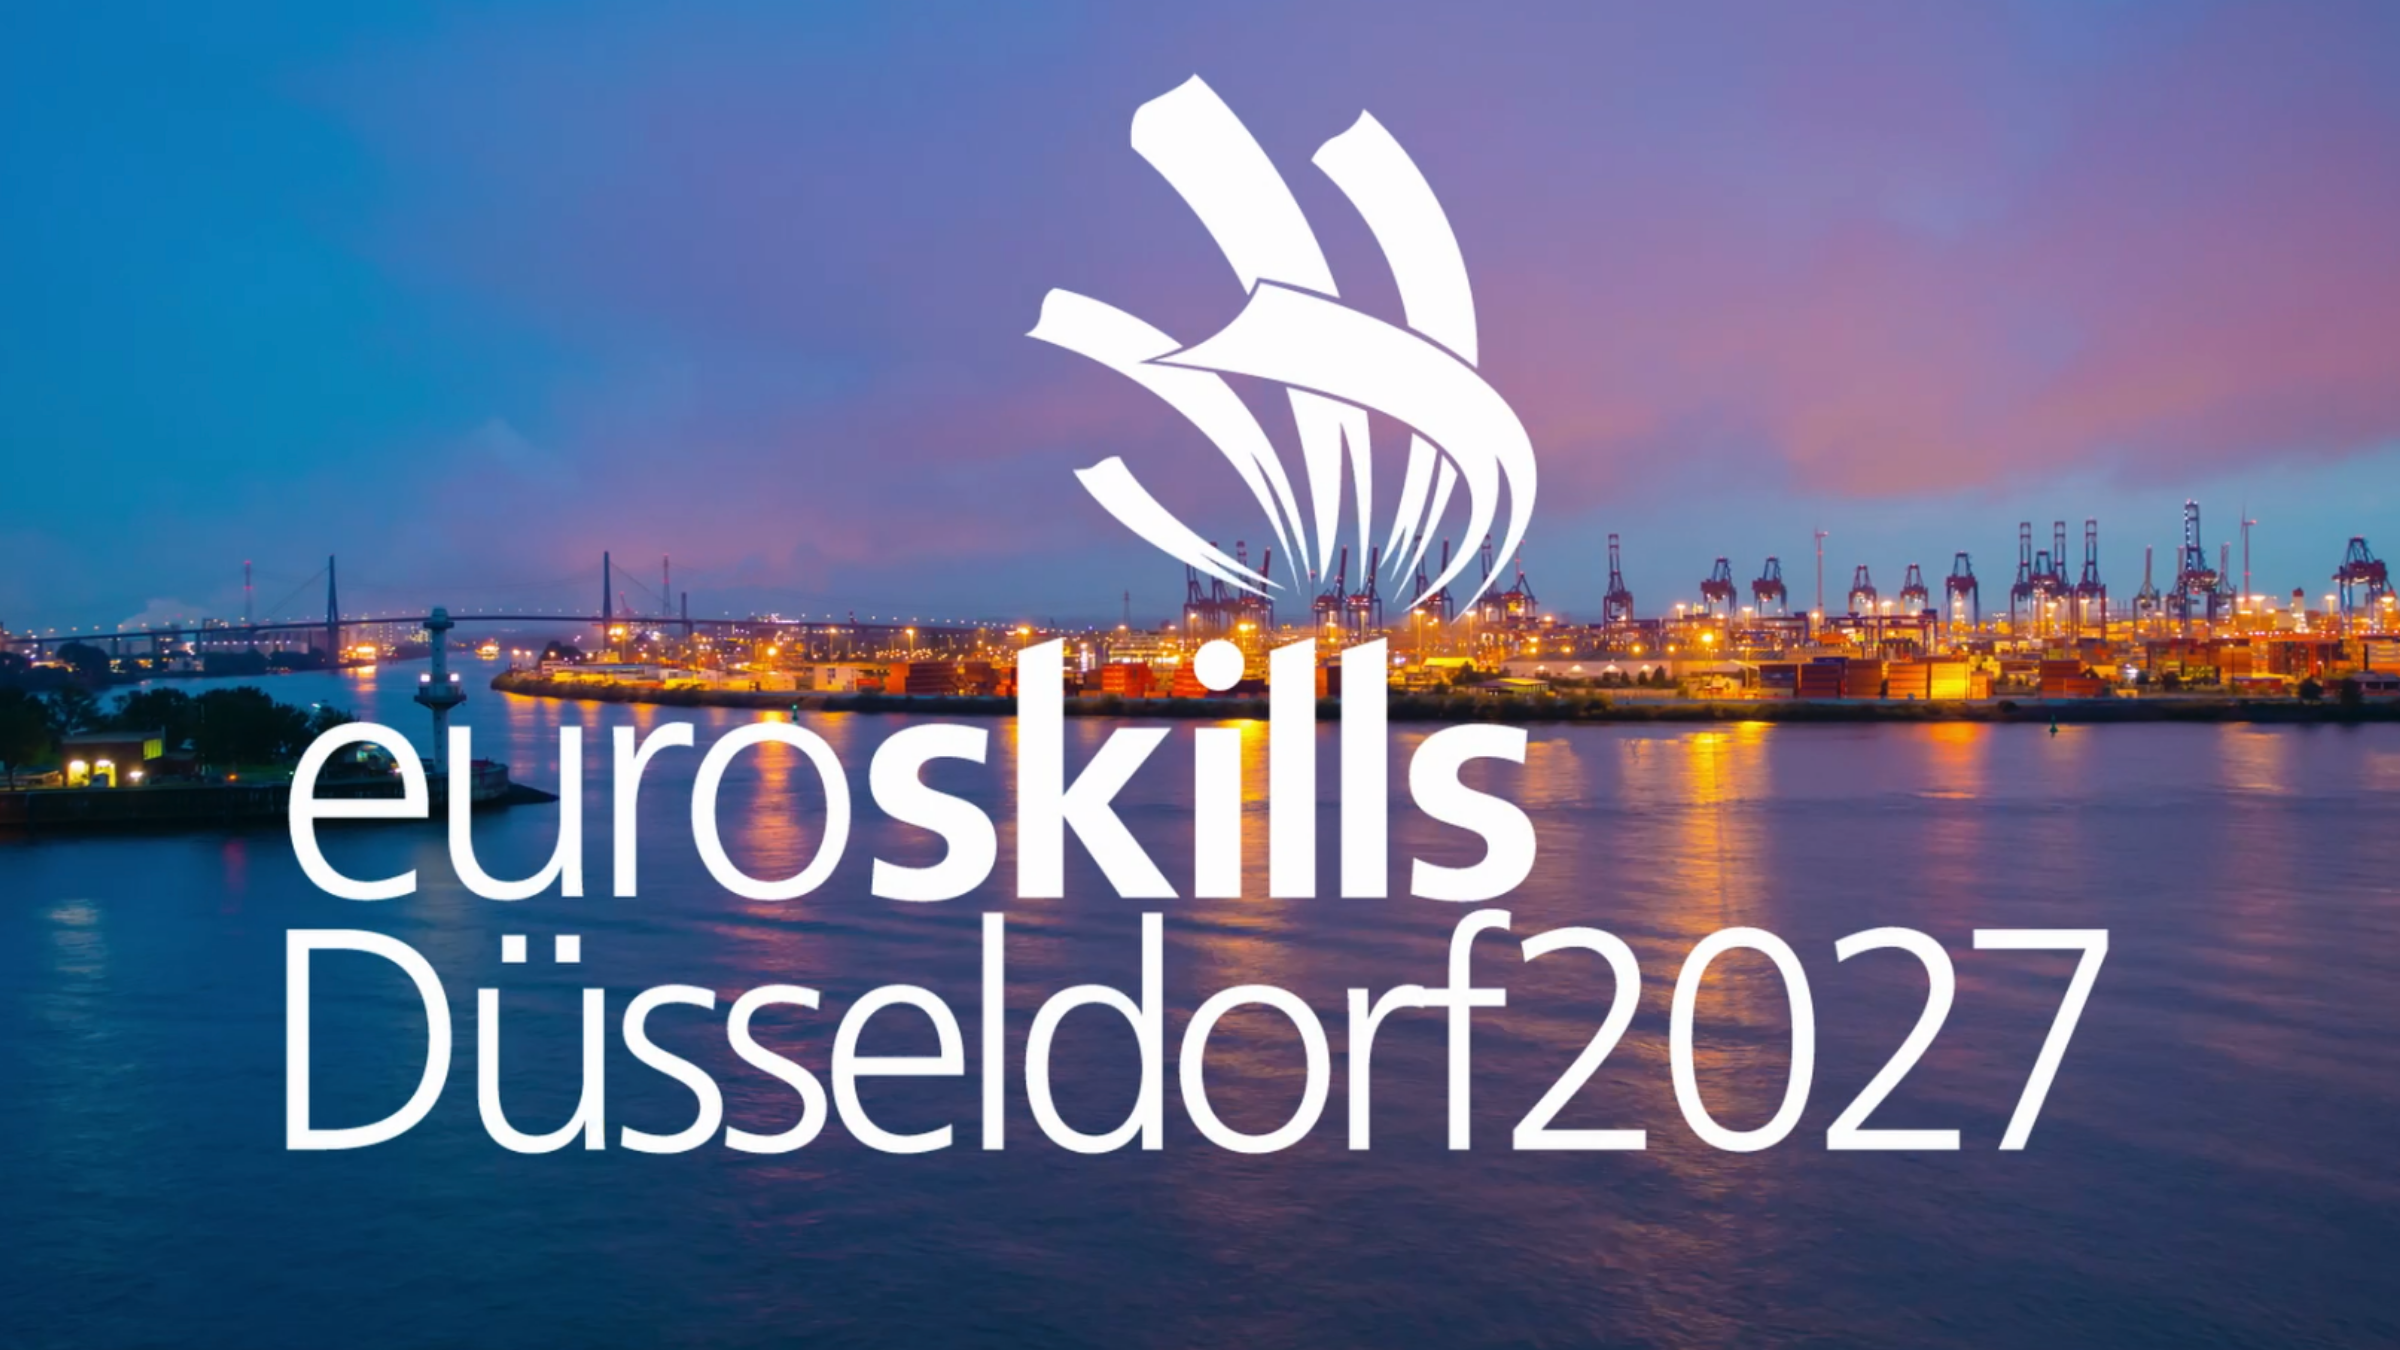 EuroSkills_Dusseldorf_2027_Twitter_3.png